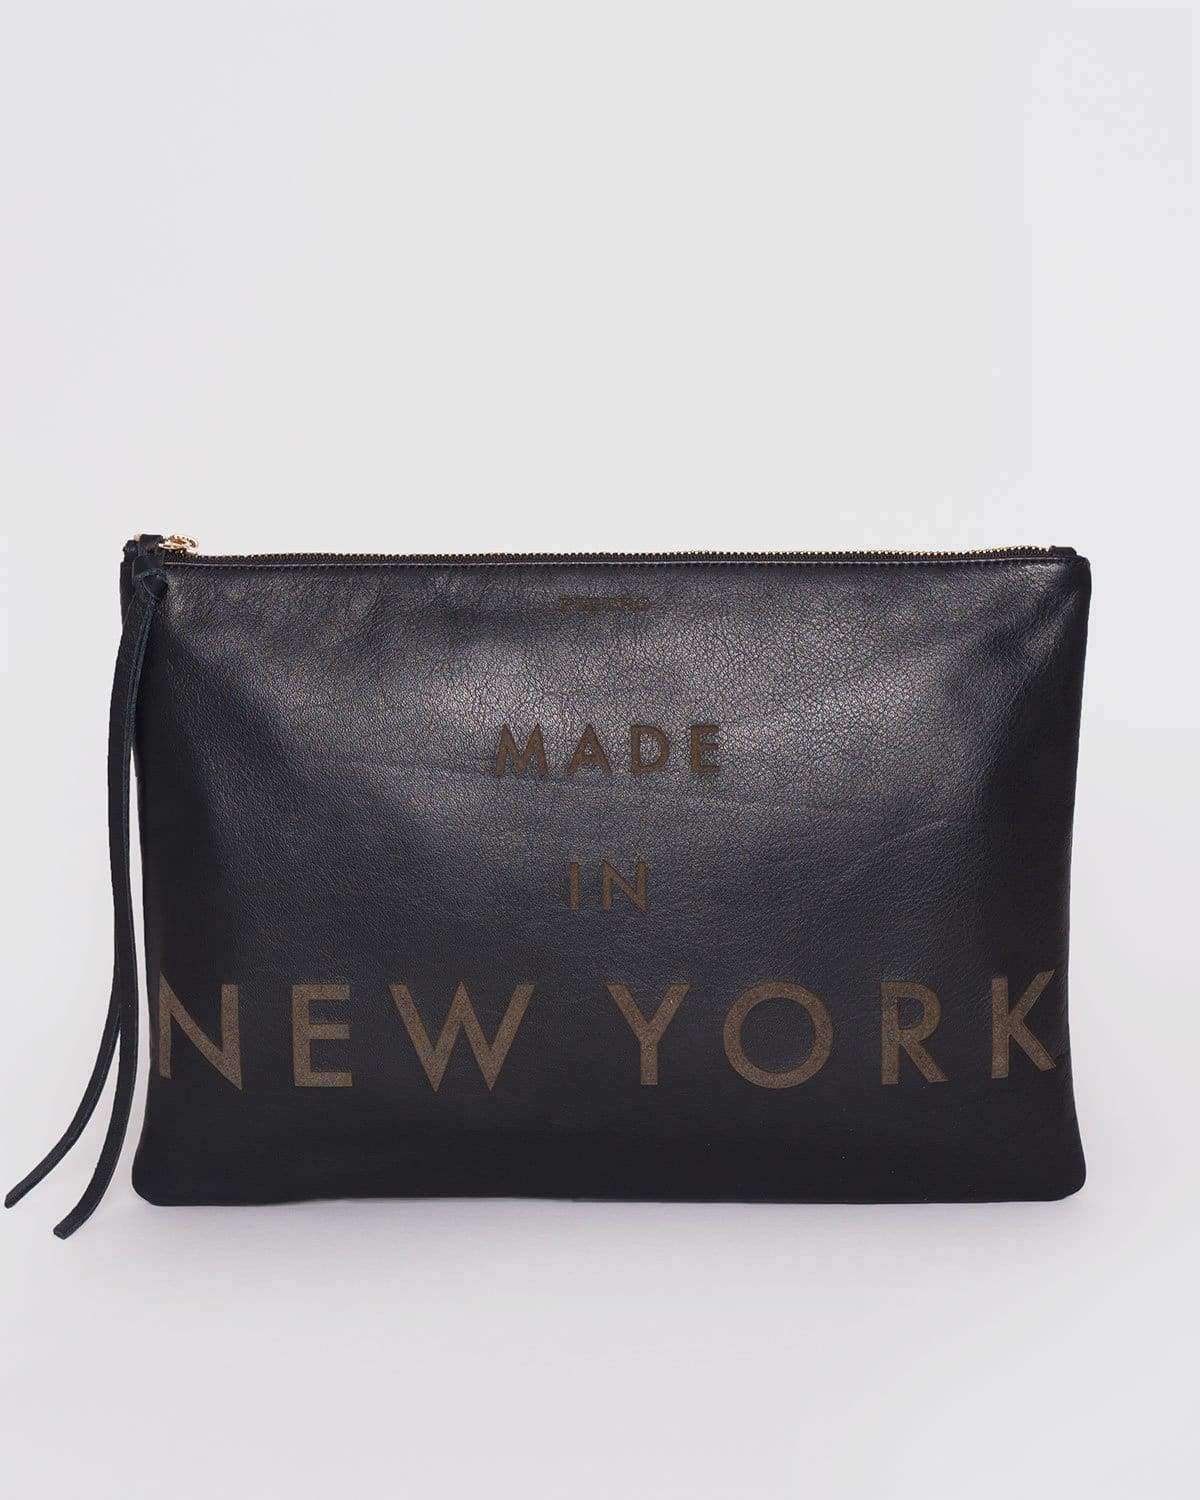 Pietro Made in New York - Black Bags | Pietro NYC